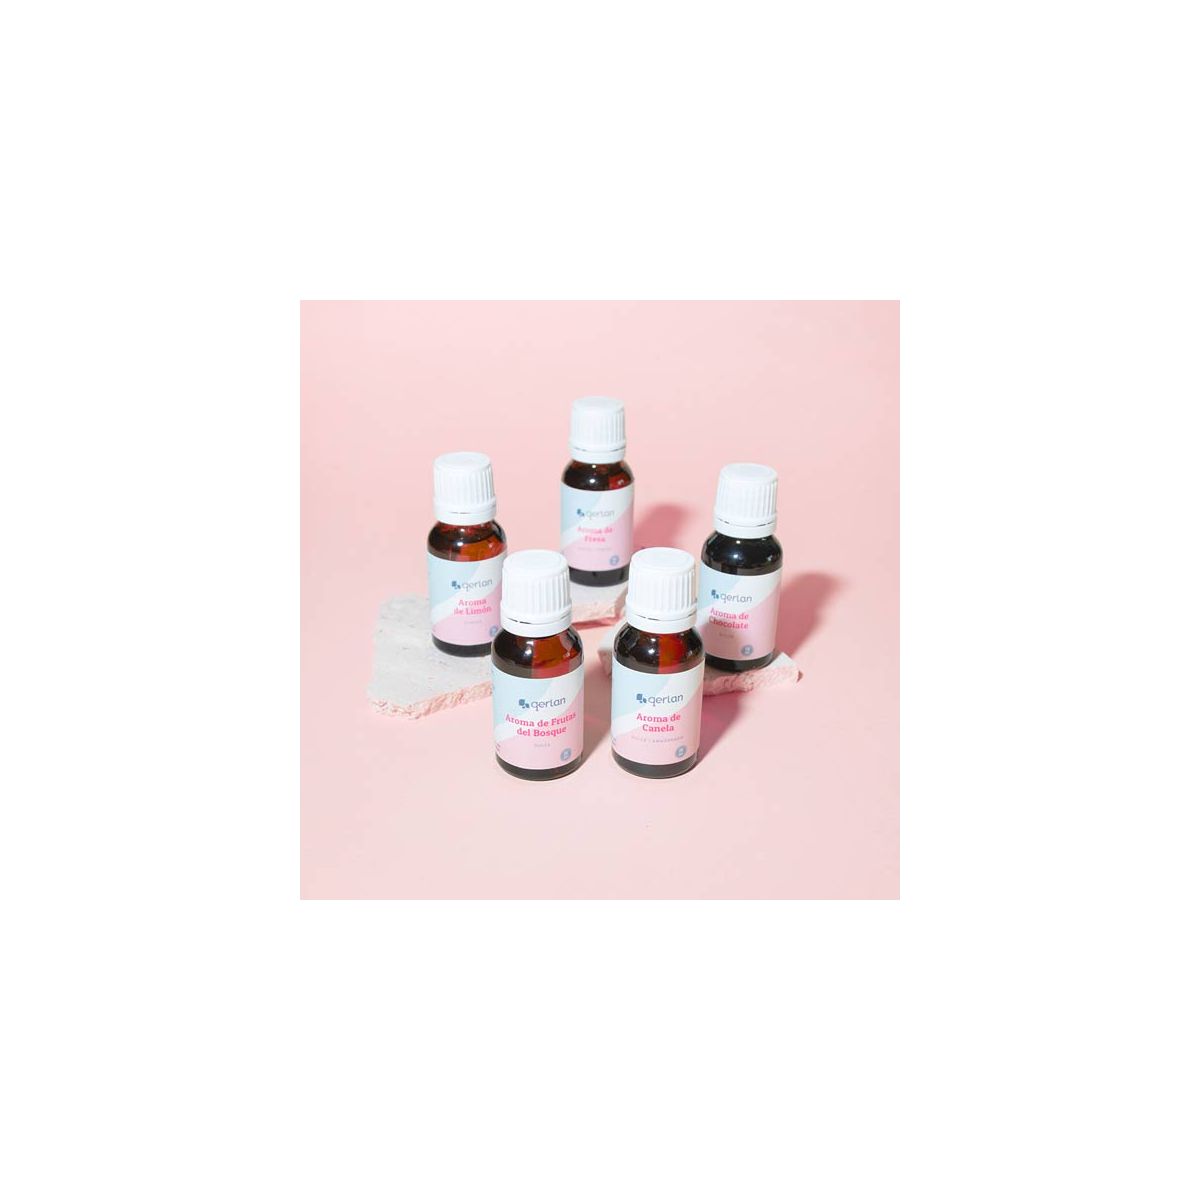 Rosa fuerte para jabón de glicerina - Comprar - Jabonarium Cosmética Natural